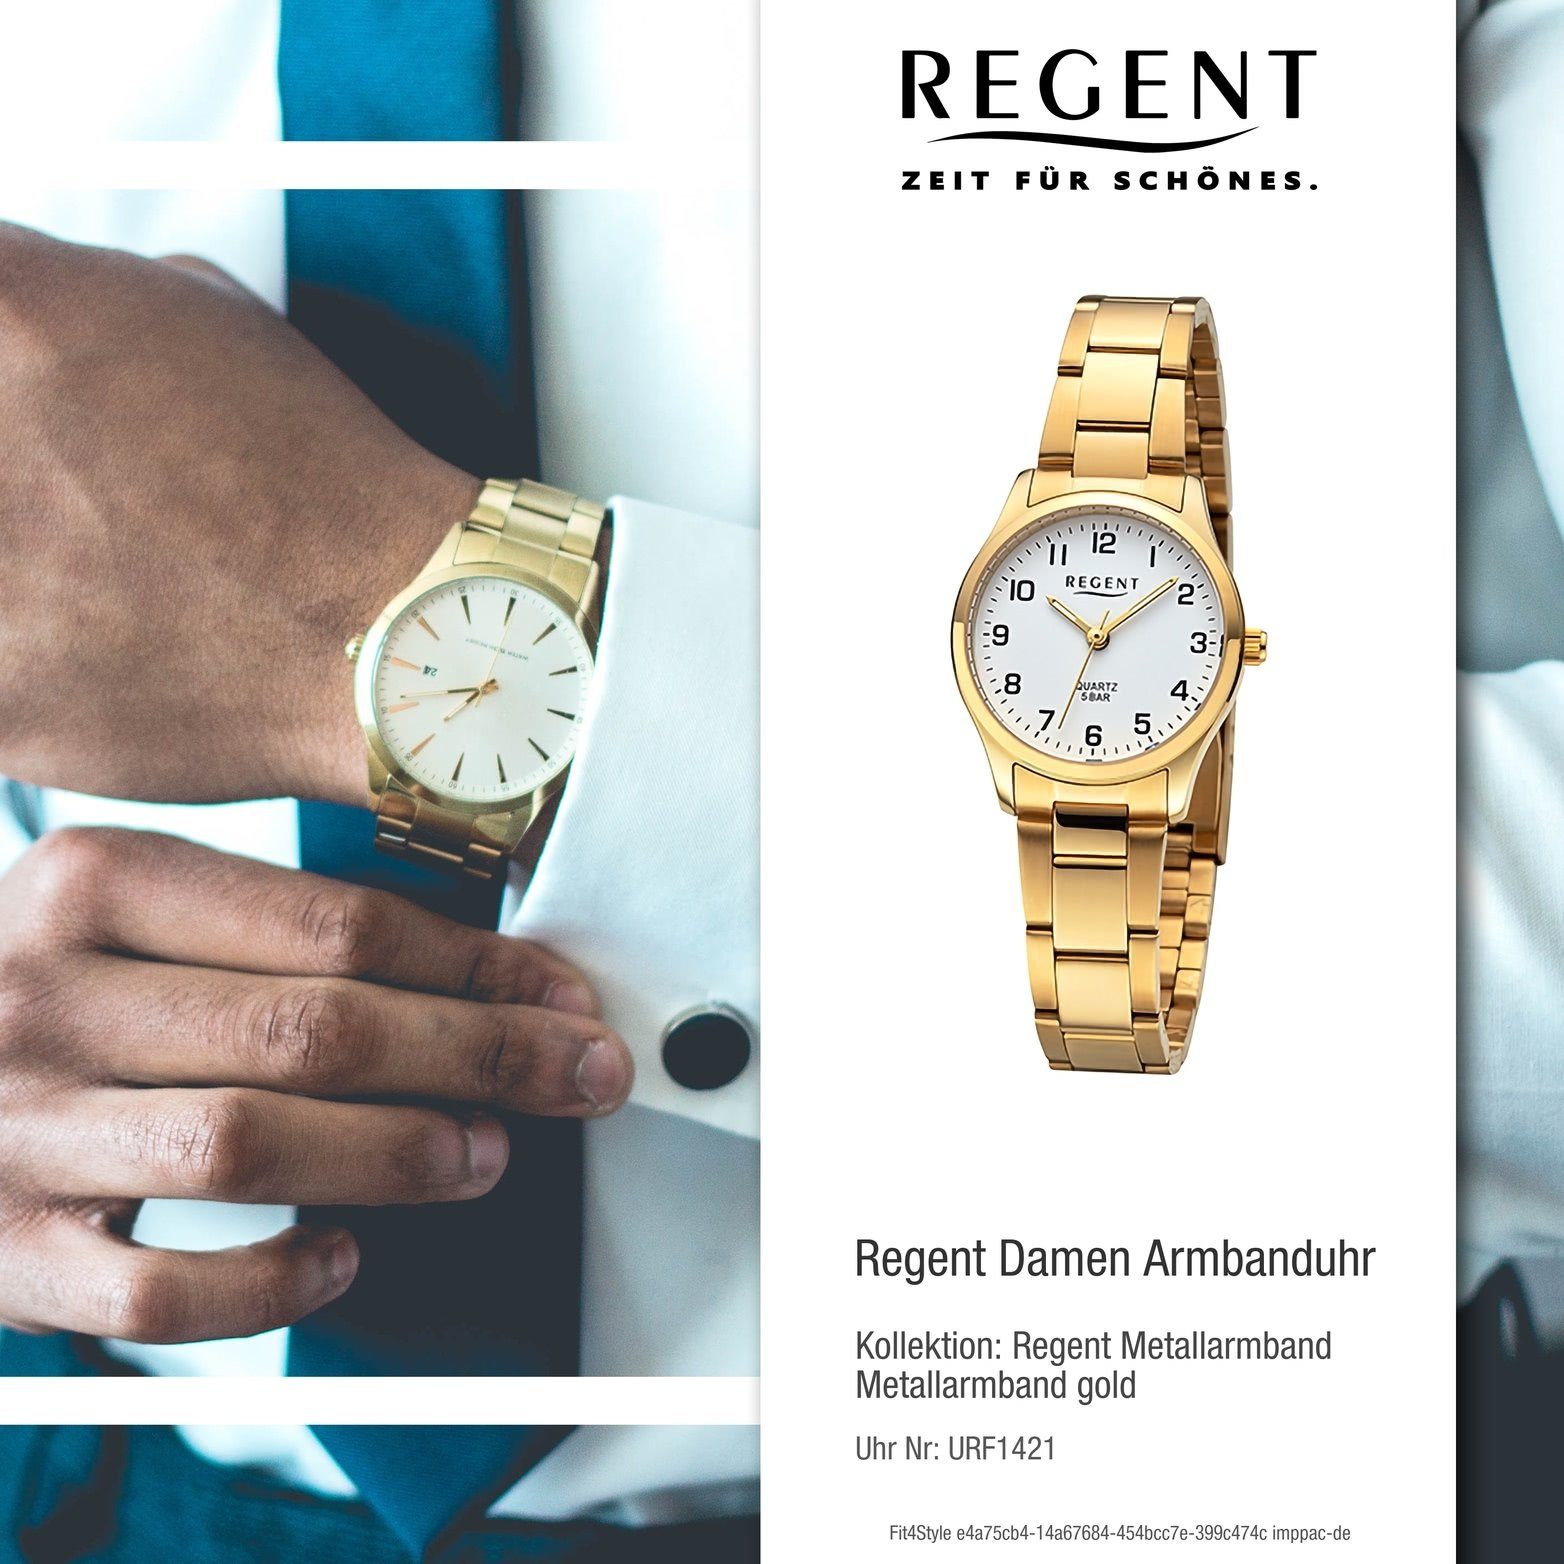 (ca. Quarzuhr Damen gold, 27mm) Gehäuse, Metallarmband groß Armbanduhr Damenuhr Analog, Regent extra rundes Regent